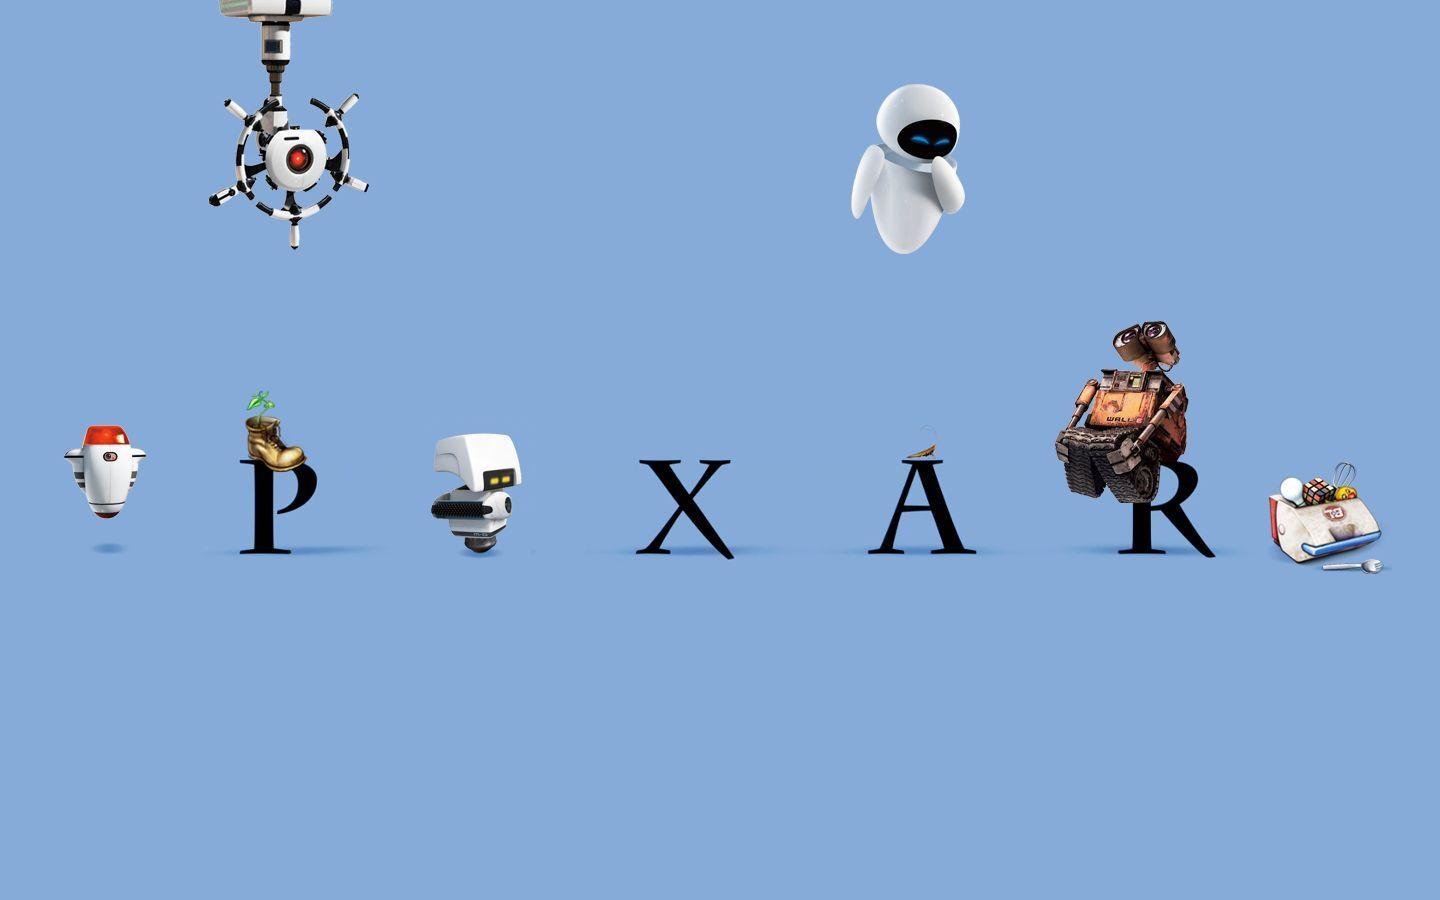 Wall-E Pixar Logo - Pin by Ari Cornett on Pixar's Wall-e | Pixar, Pixar movies, Disney ...